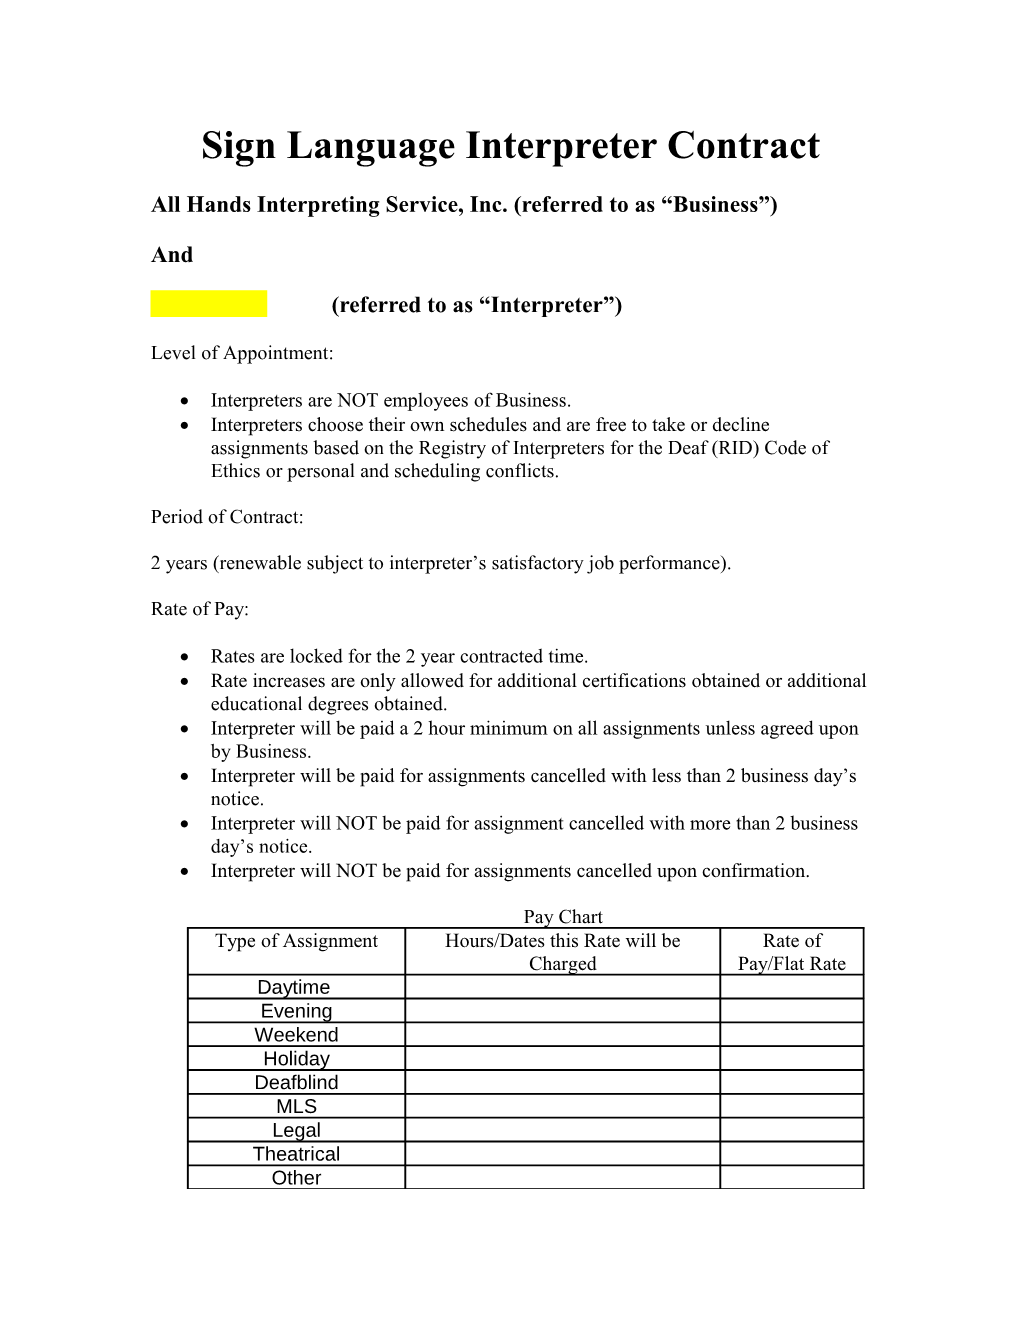 Sign Language Interpreter Contract